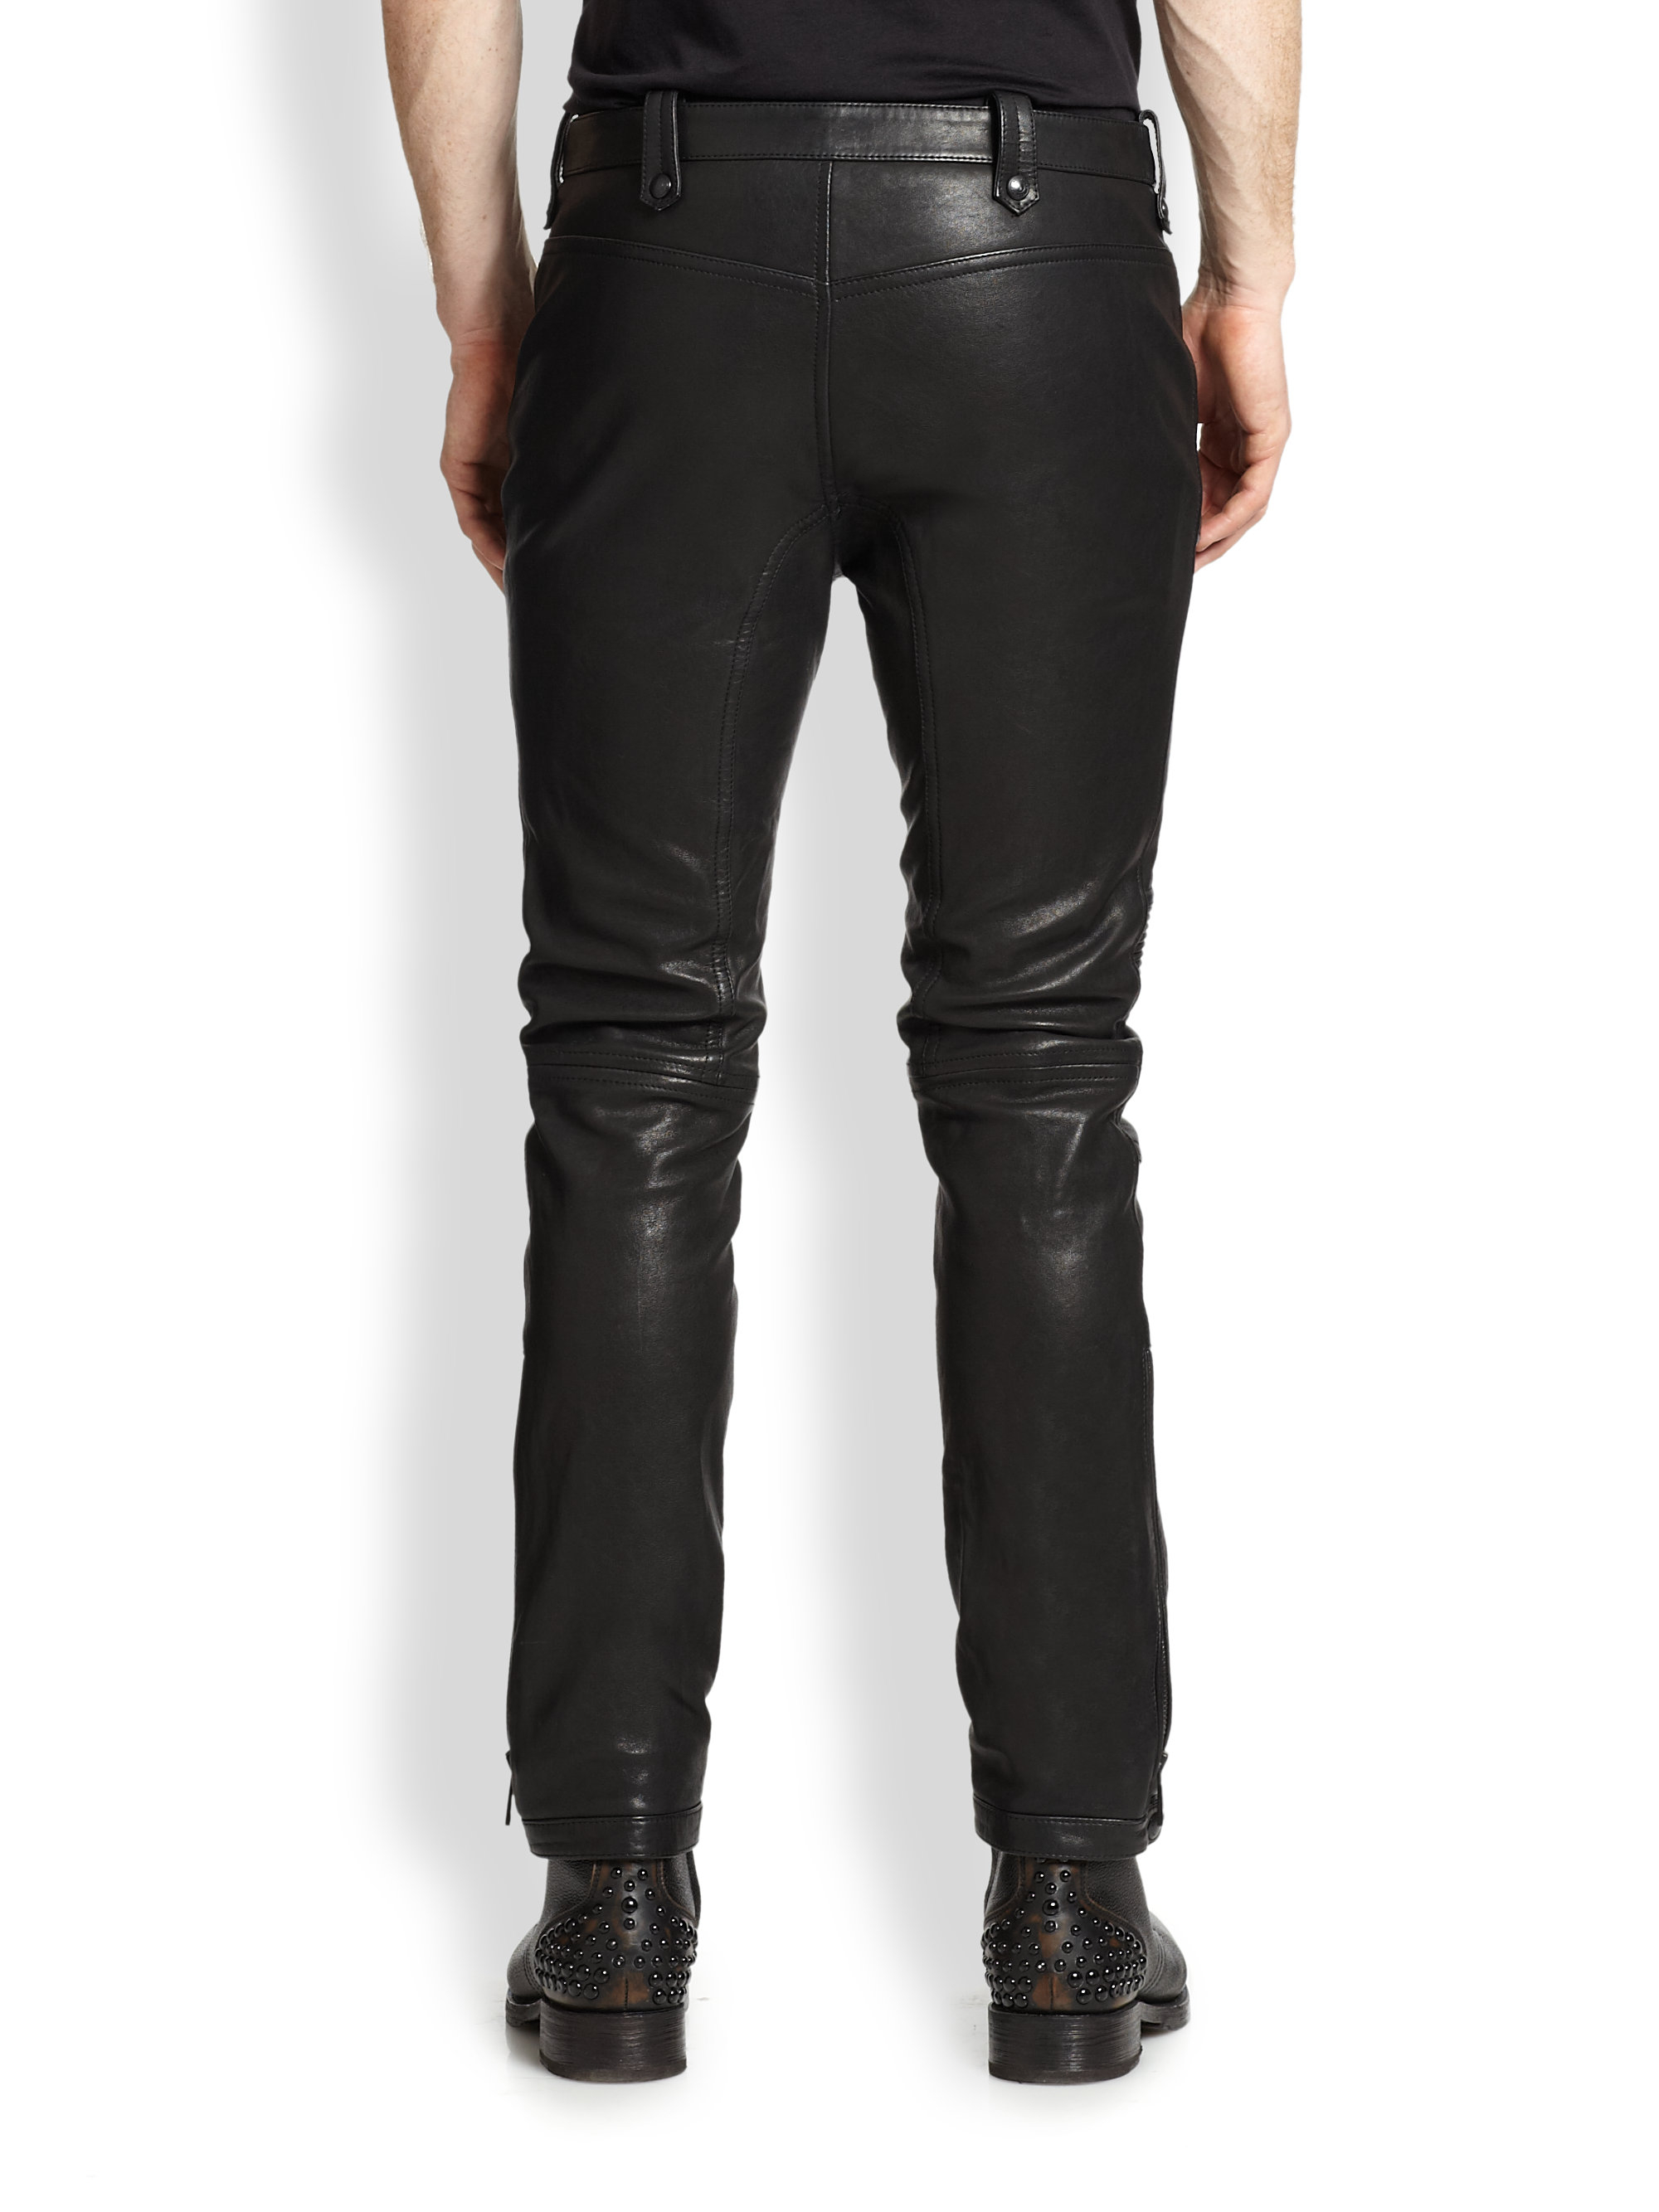 Lyst - Belstaff Washed Leather Pants in Black for Men